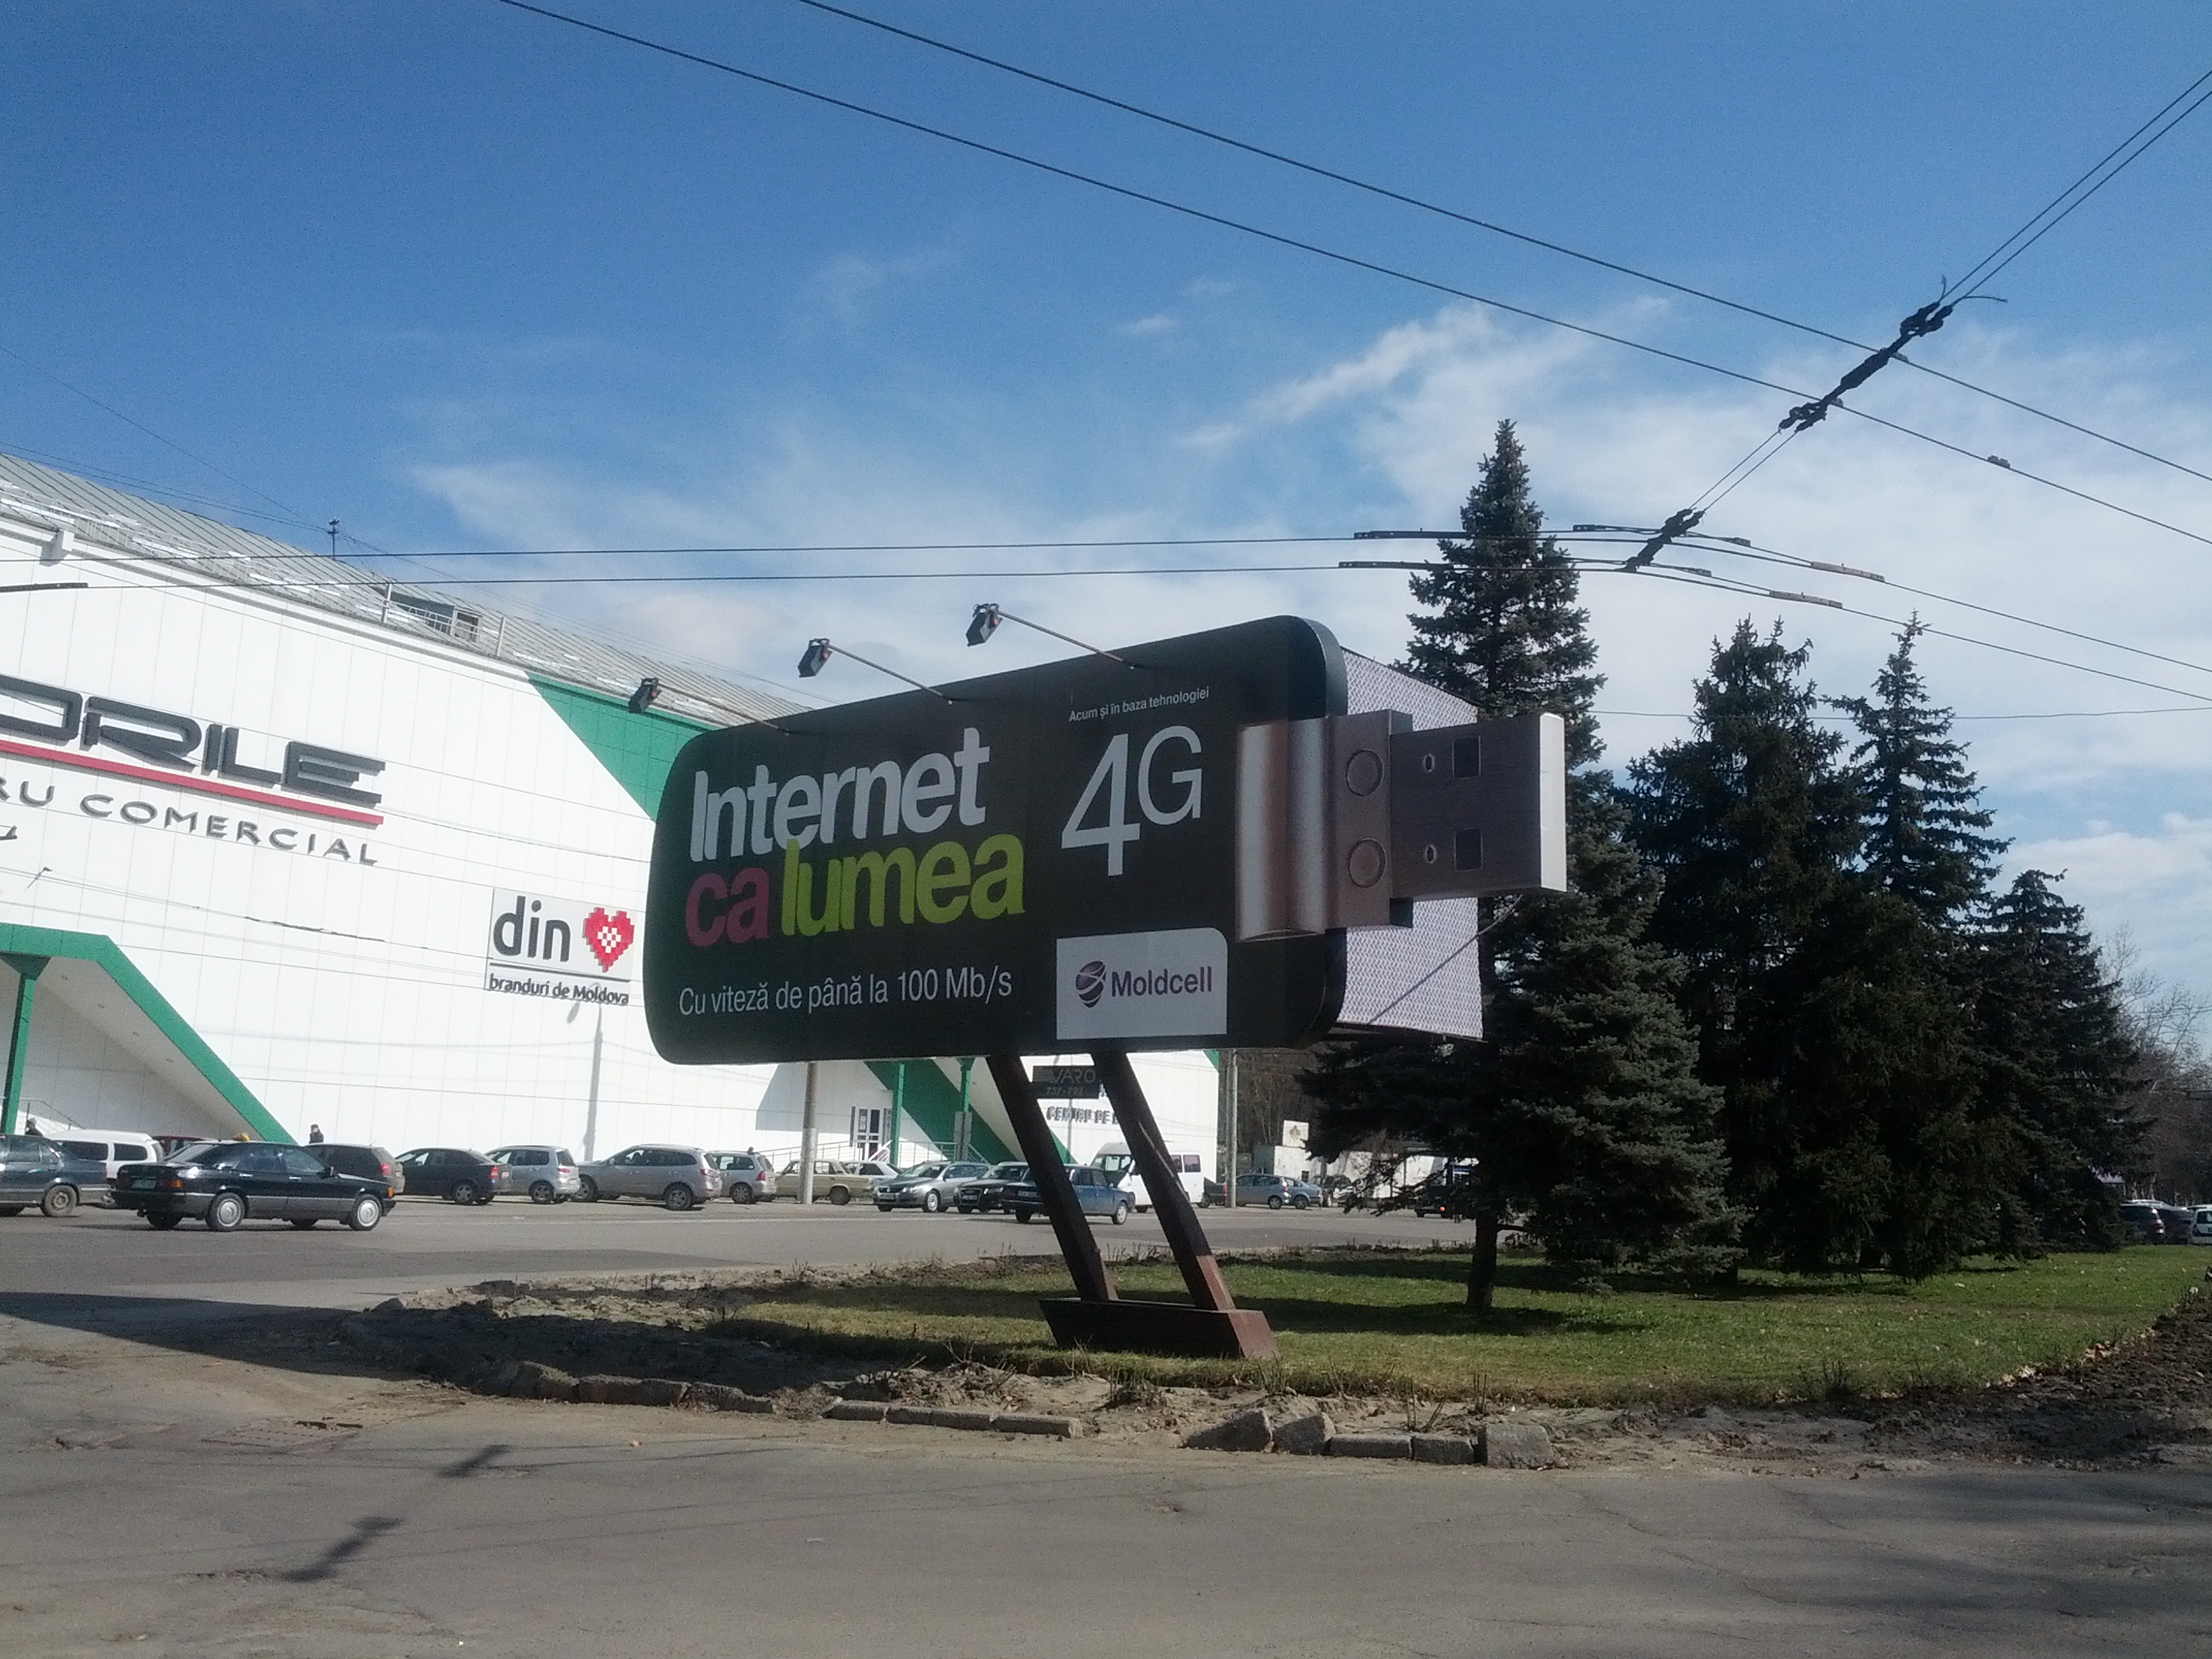 MD, Orasul Chisinau, USB Panou Internet ca lumea 4G